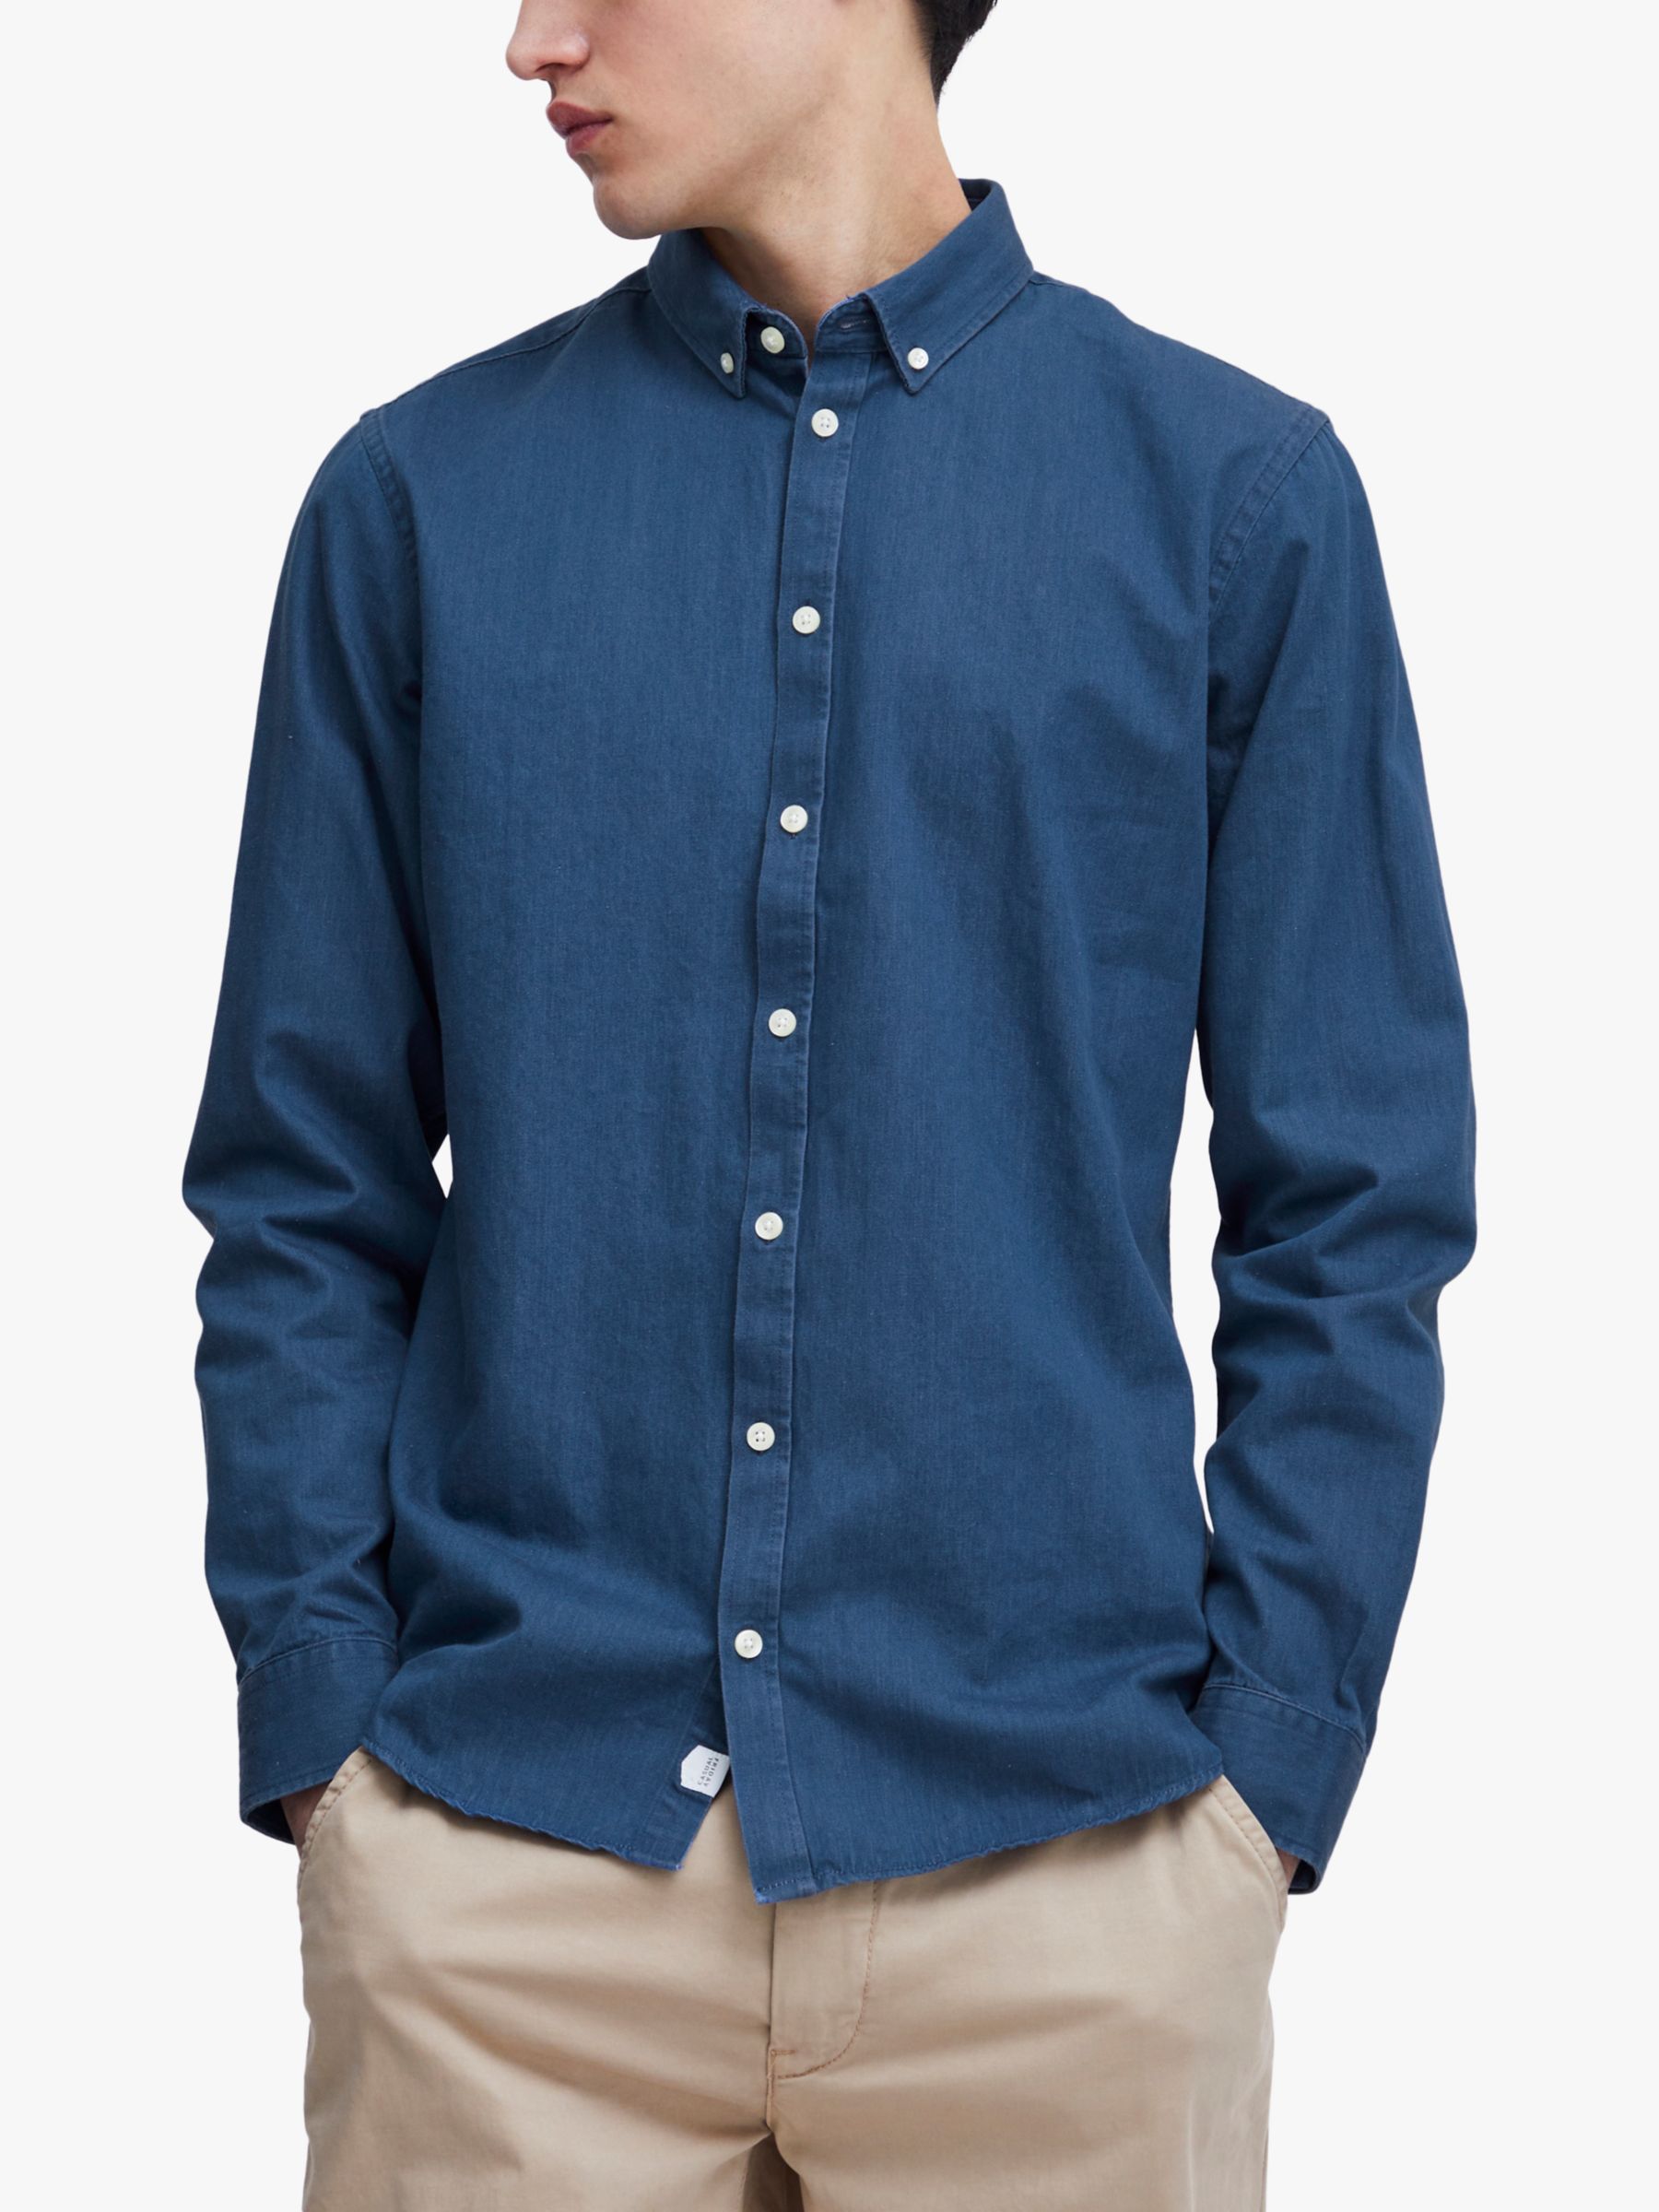 Casual Friday Anton Long Sleeve Denim Shirt, Blue, S